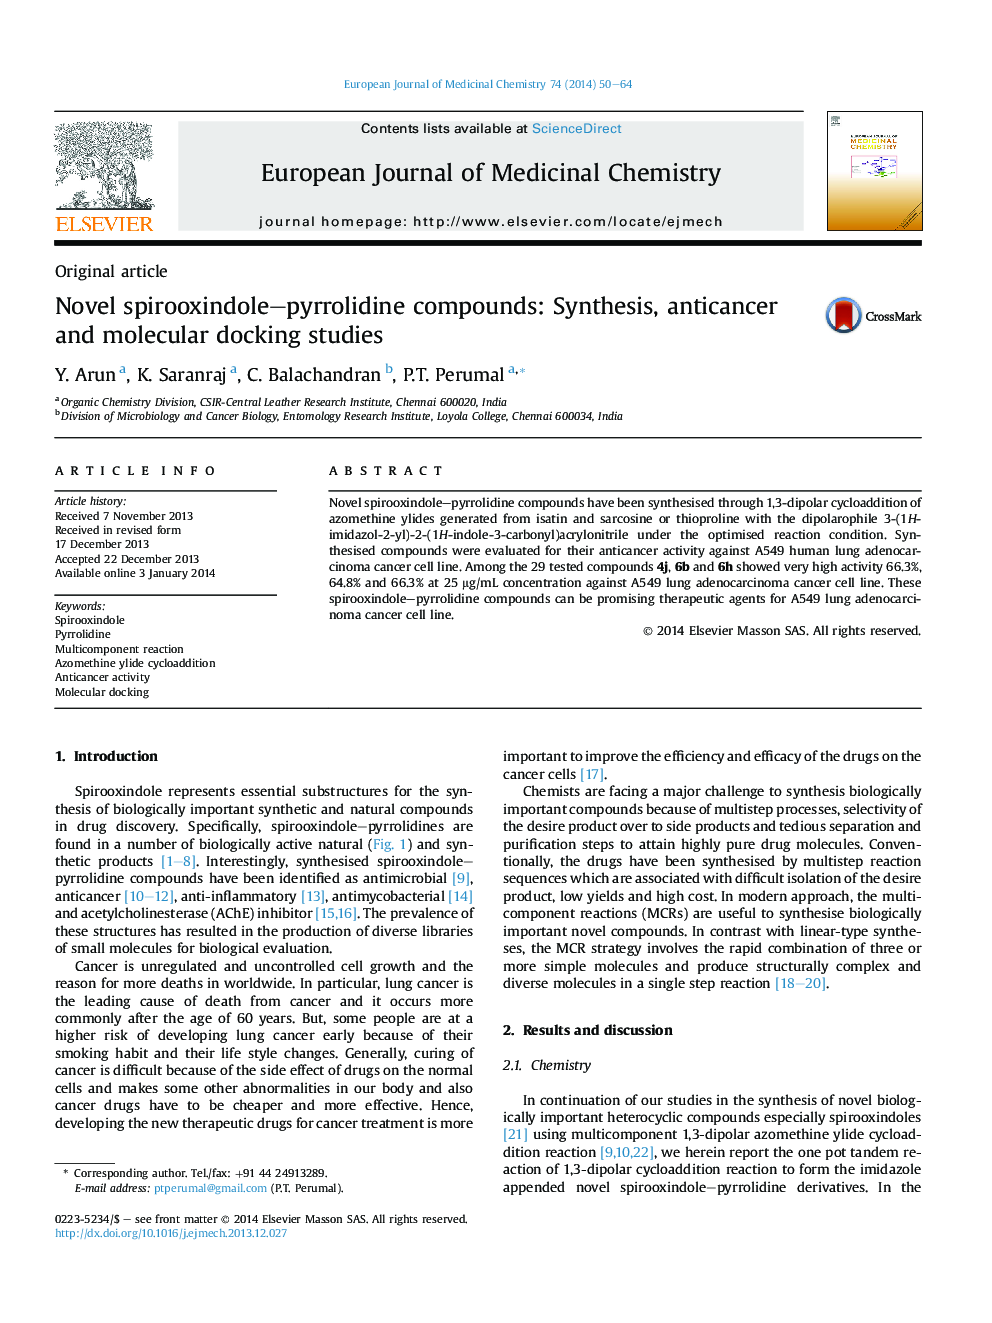 ترکیبات اسپیروکسیدول و پیرولیدین نوین: مطالعات سنتز، ضد سرطان و سوسپانسیون مولکولی 